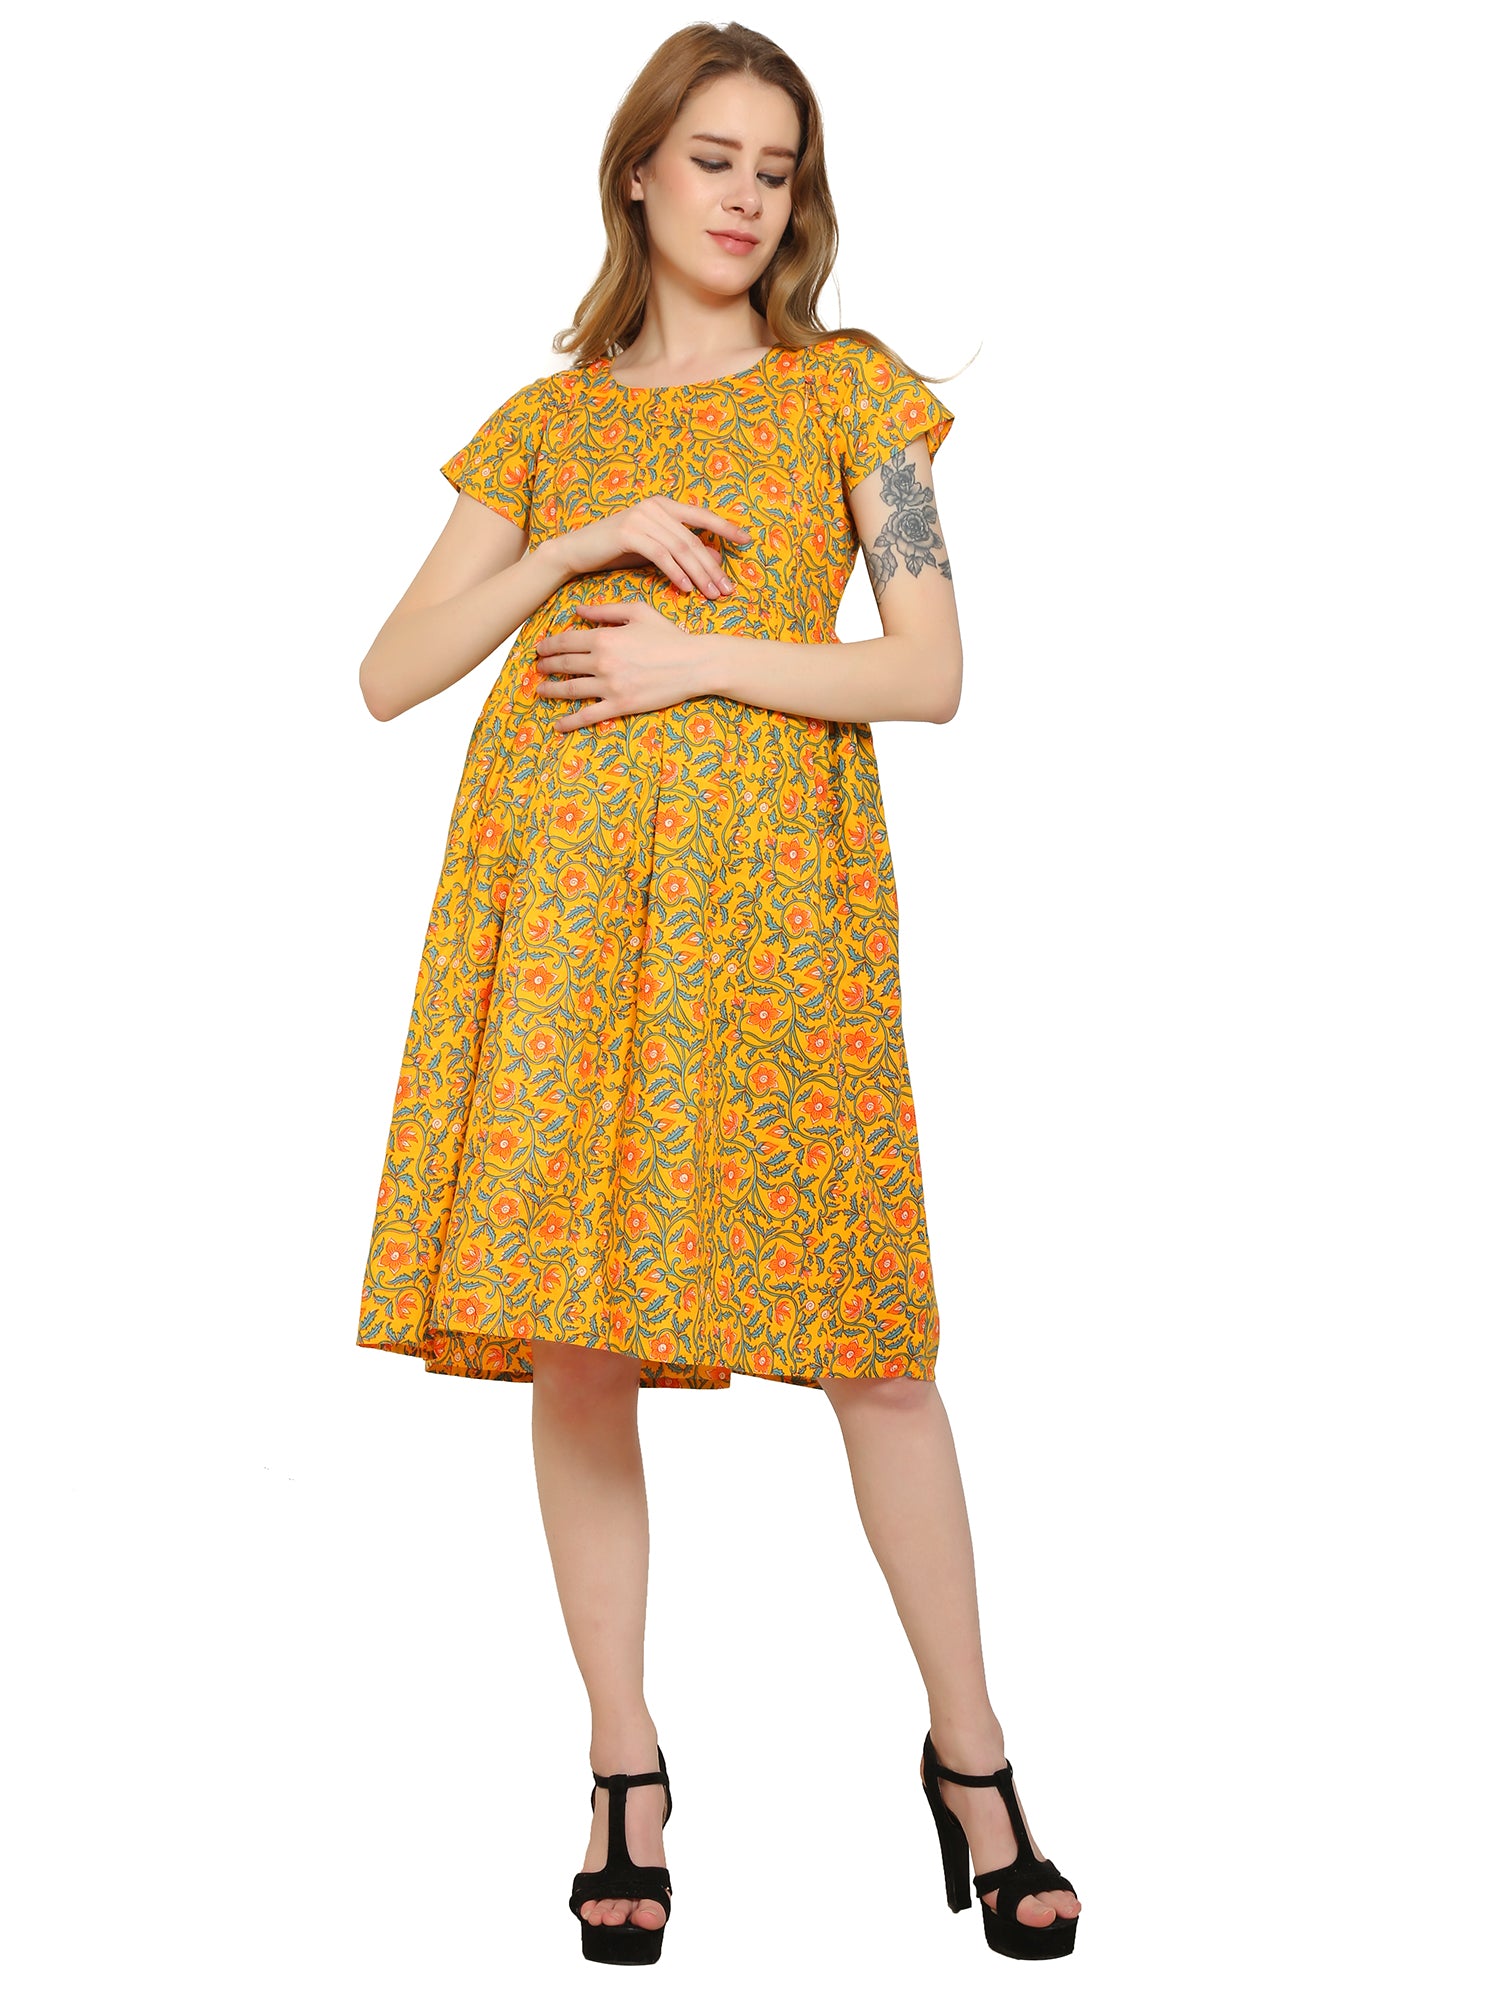 Casual Maternity Dress/Feeding dress Floral print for Pregnant Women India  | eBay